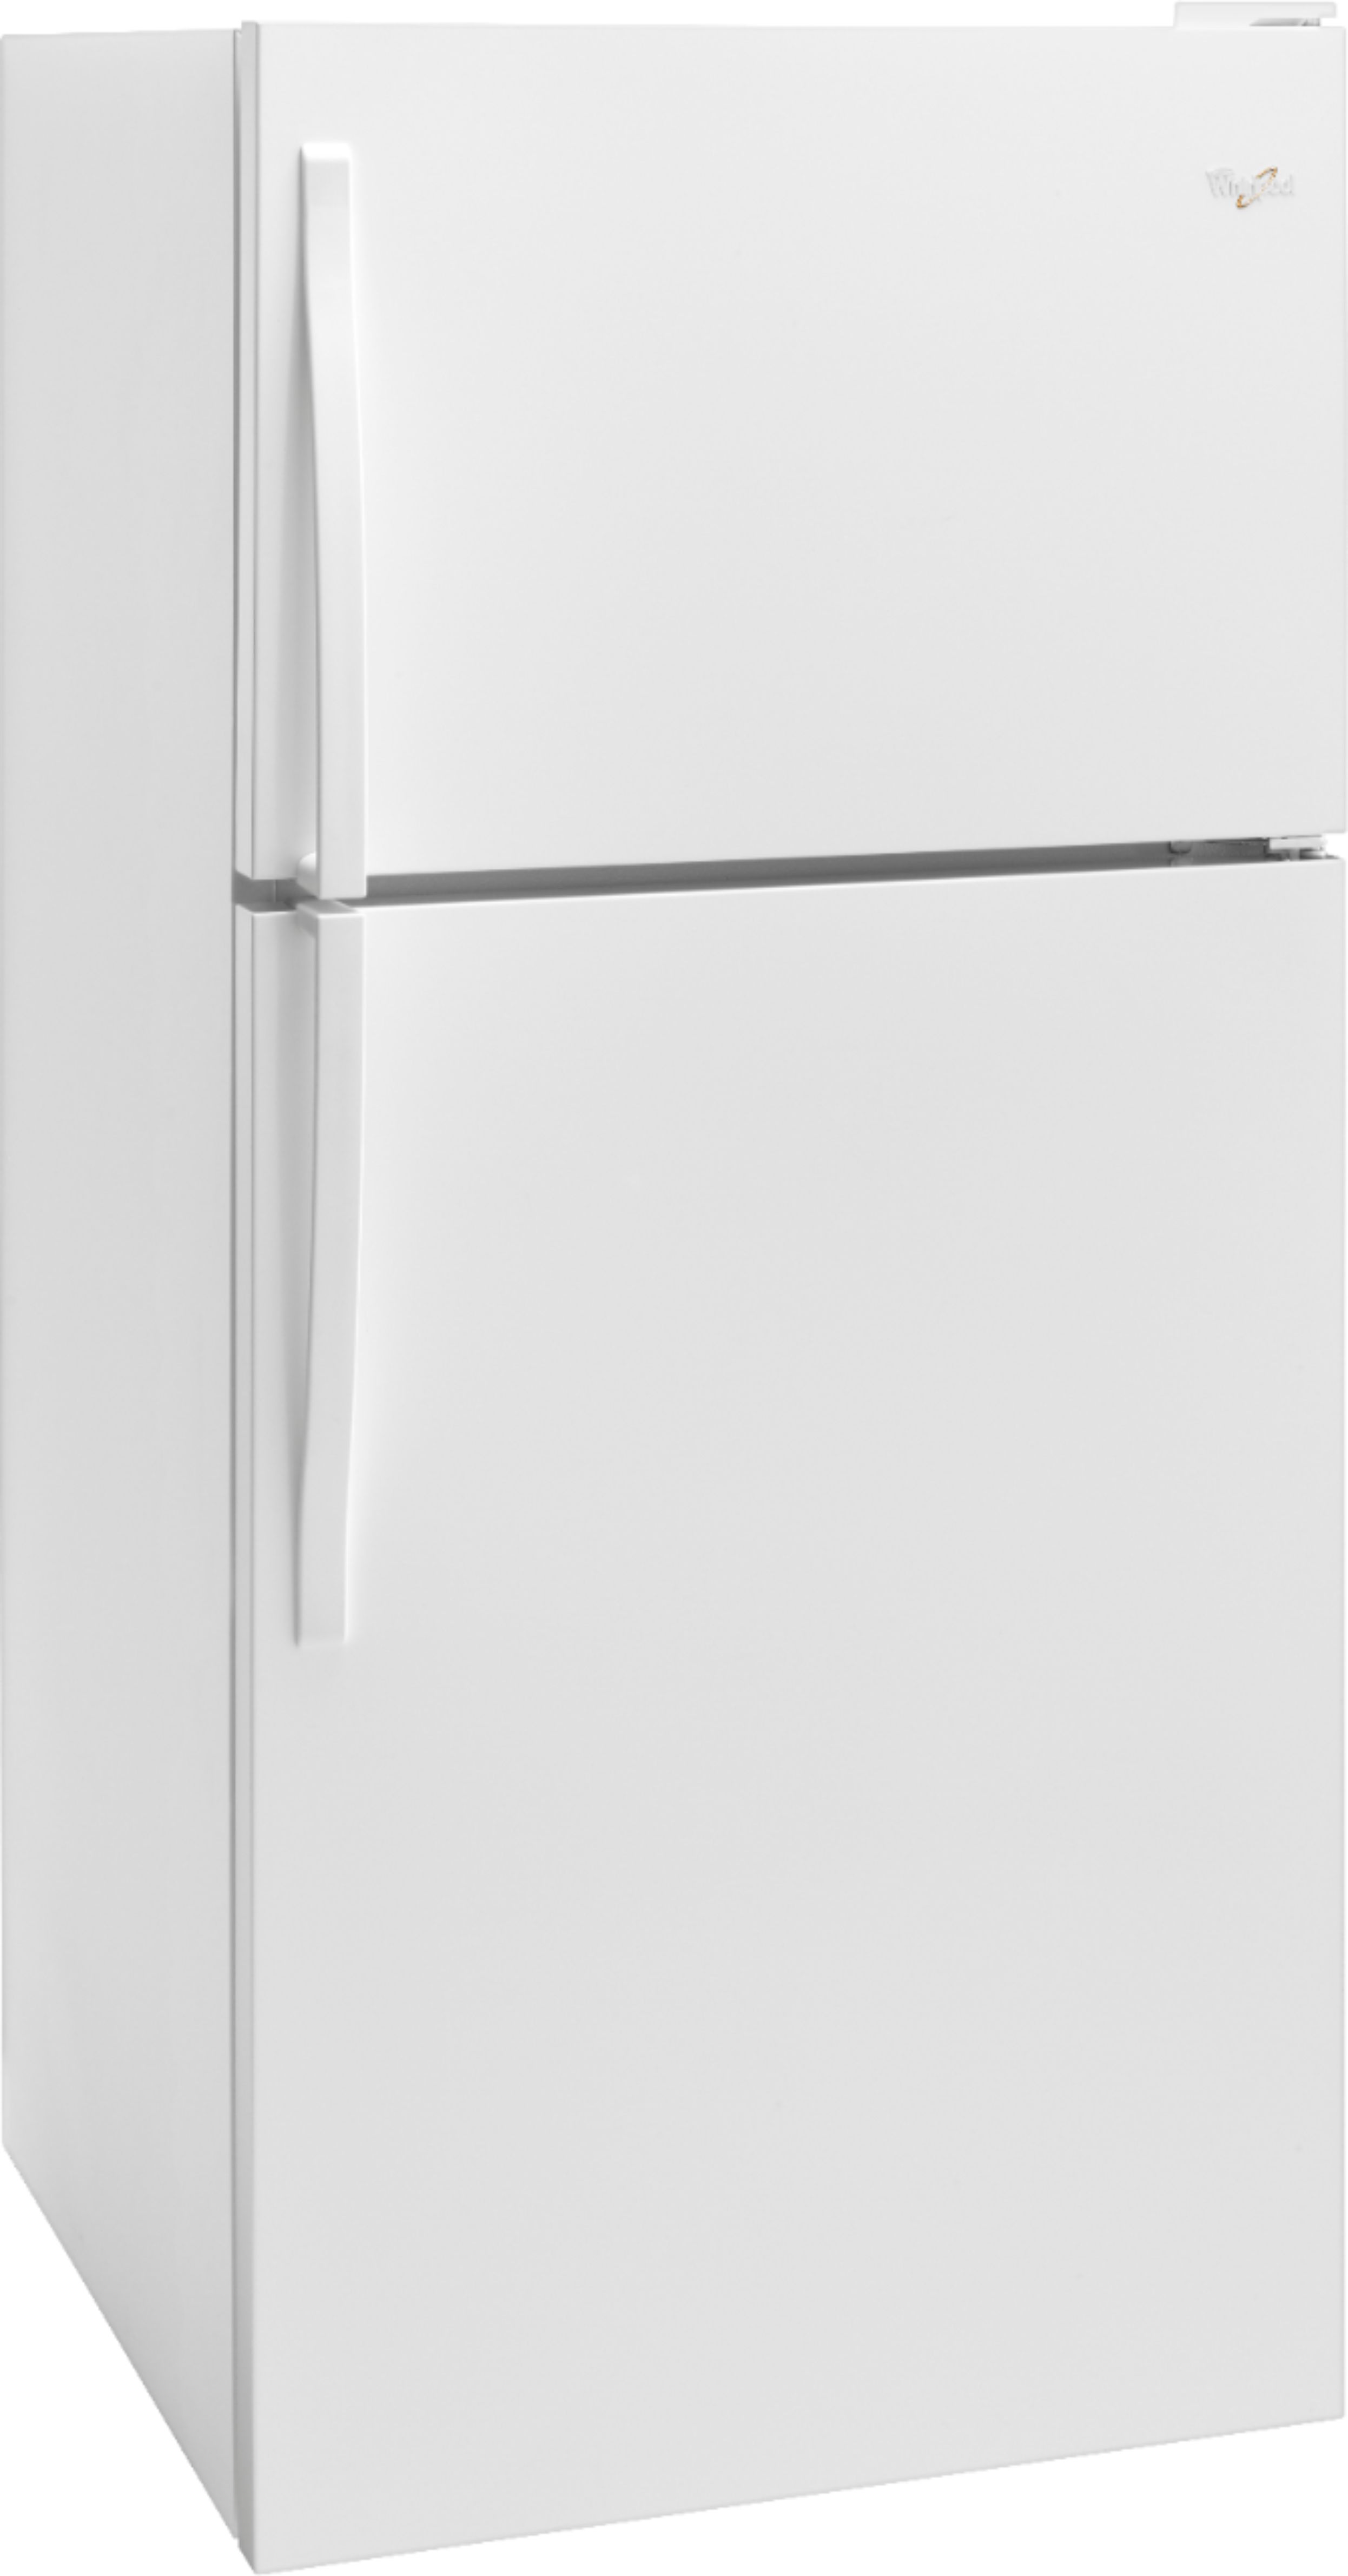 Angle View: Whirlpool - 18.2 Cu. Ft. Top-Freezer Refrigerator - White